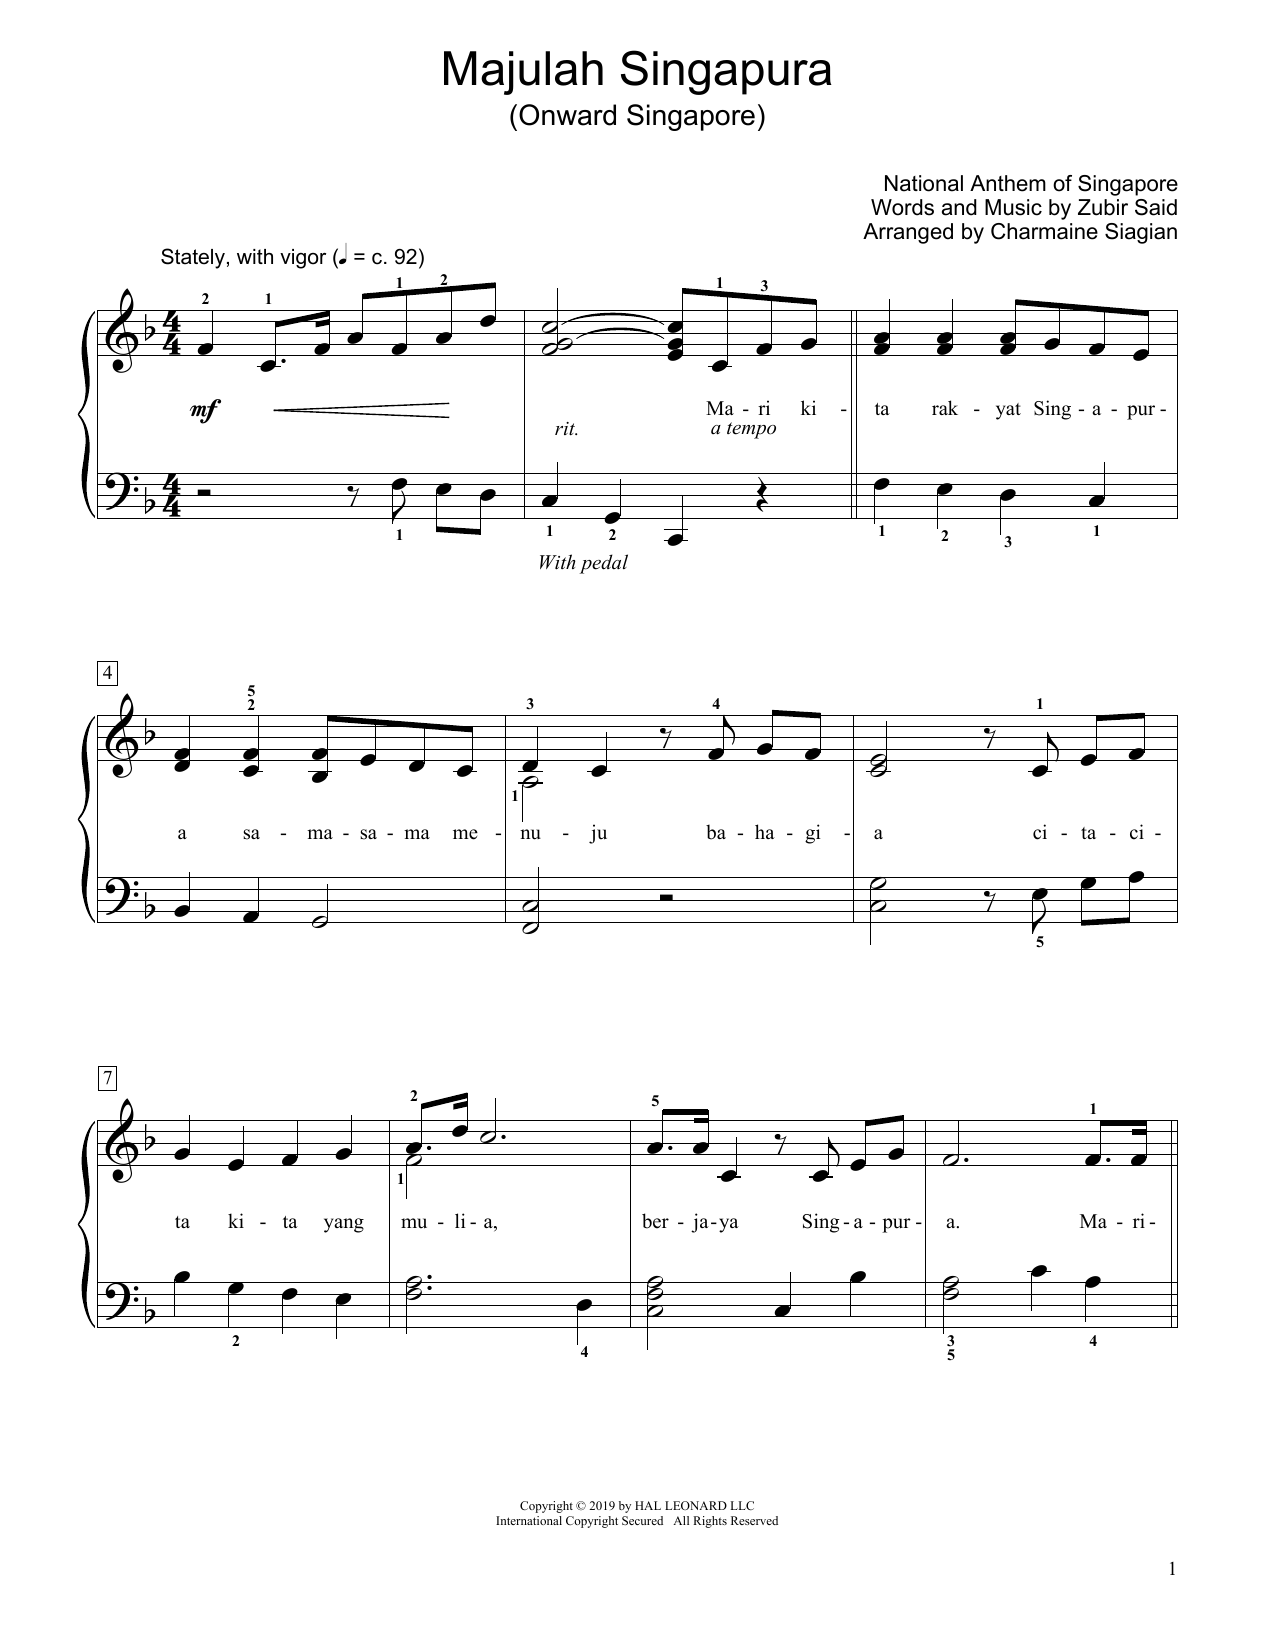 Download Zubir Said Onward Singapore (Majulah Singapura) (arr. Charmaine Siagian) Sheet Music and learn how to play Educational Piano PDF digital score in minutes